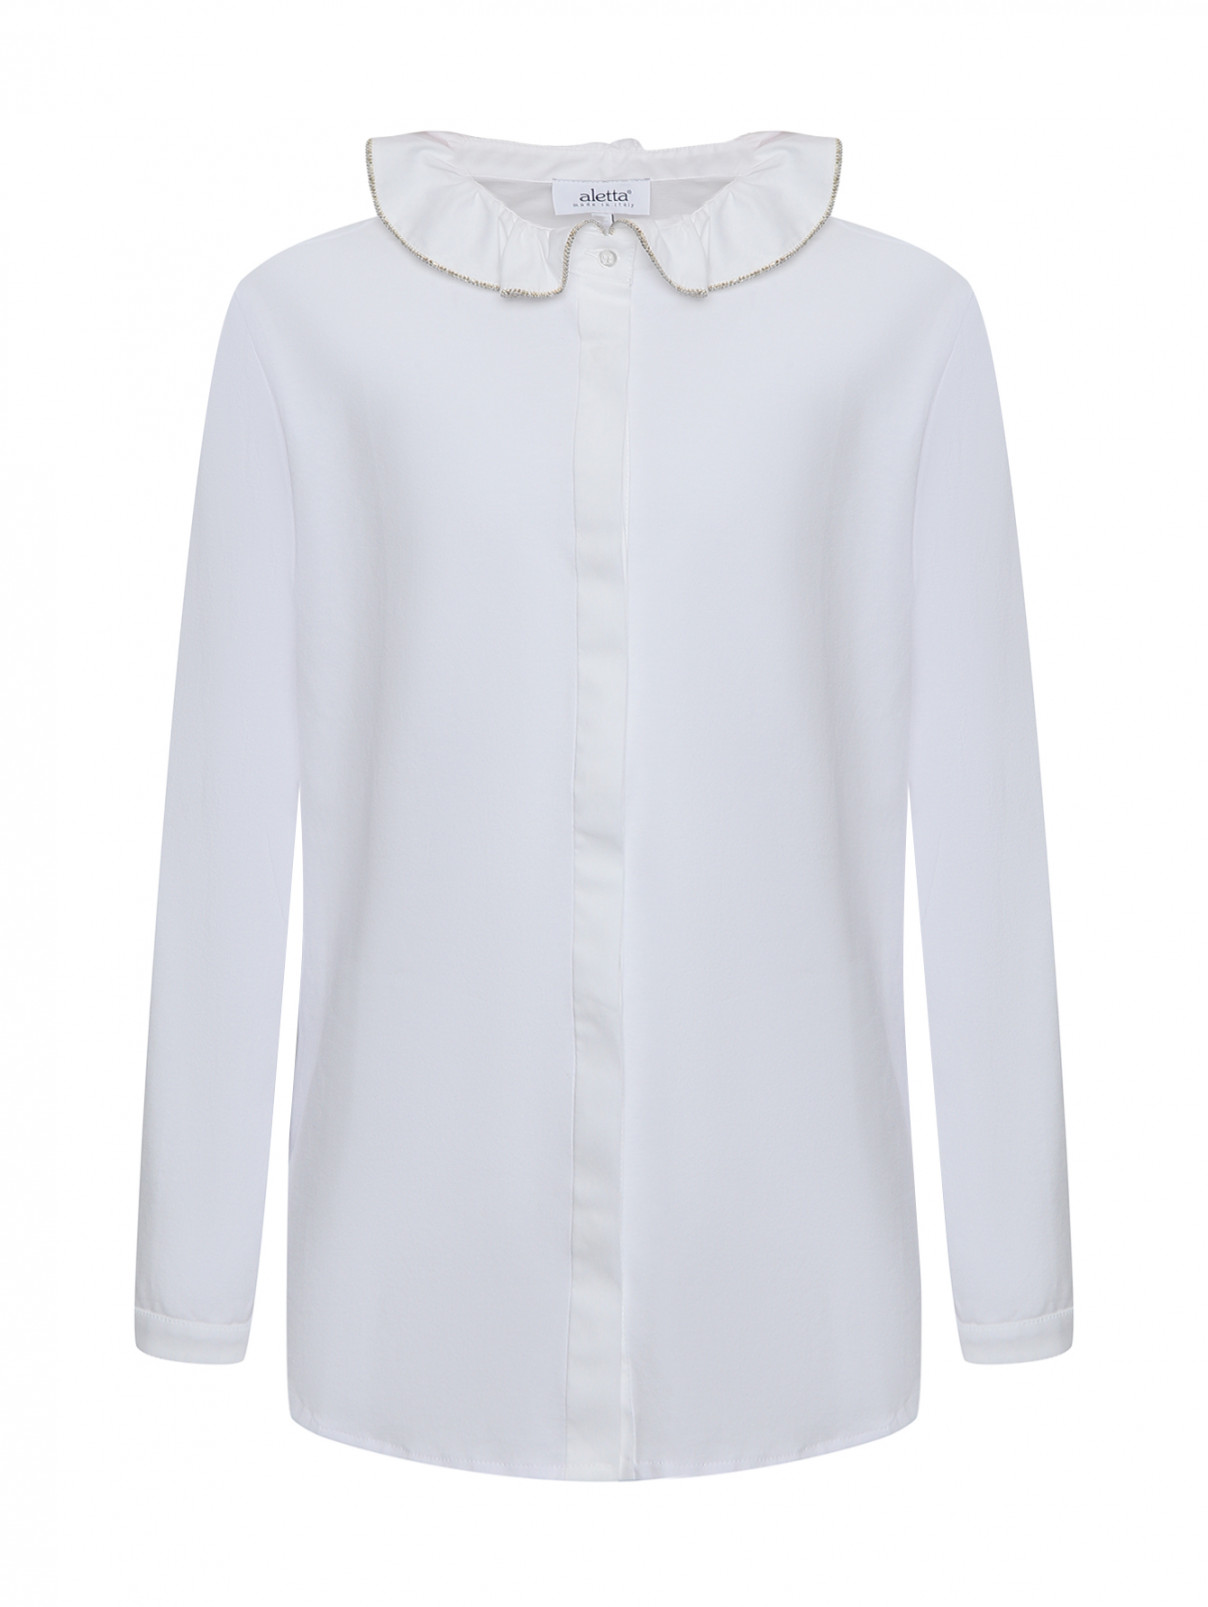 Блуза Aletta Couture  –  Общий вид  – Цвет:  Белый